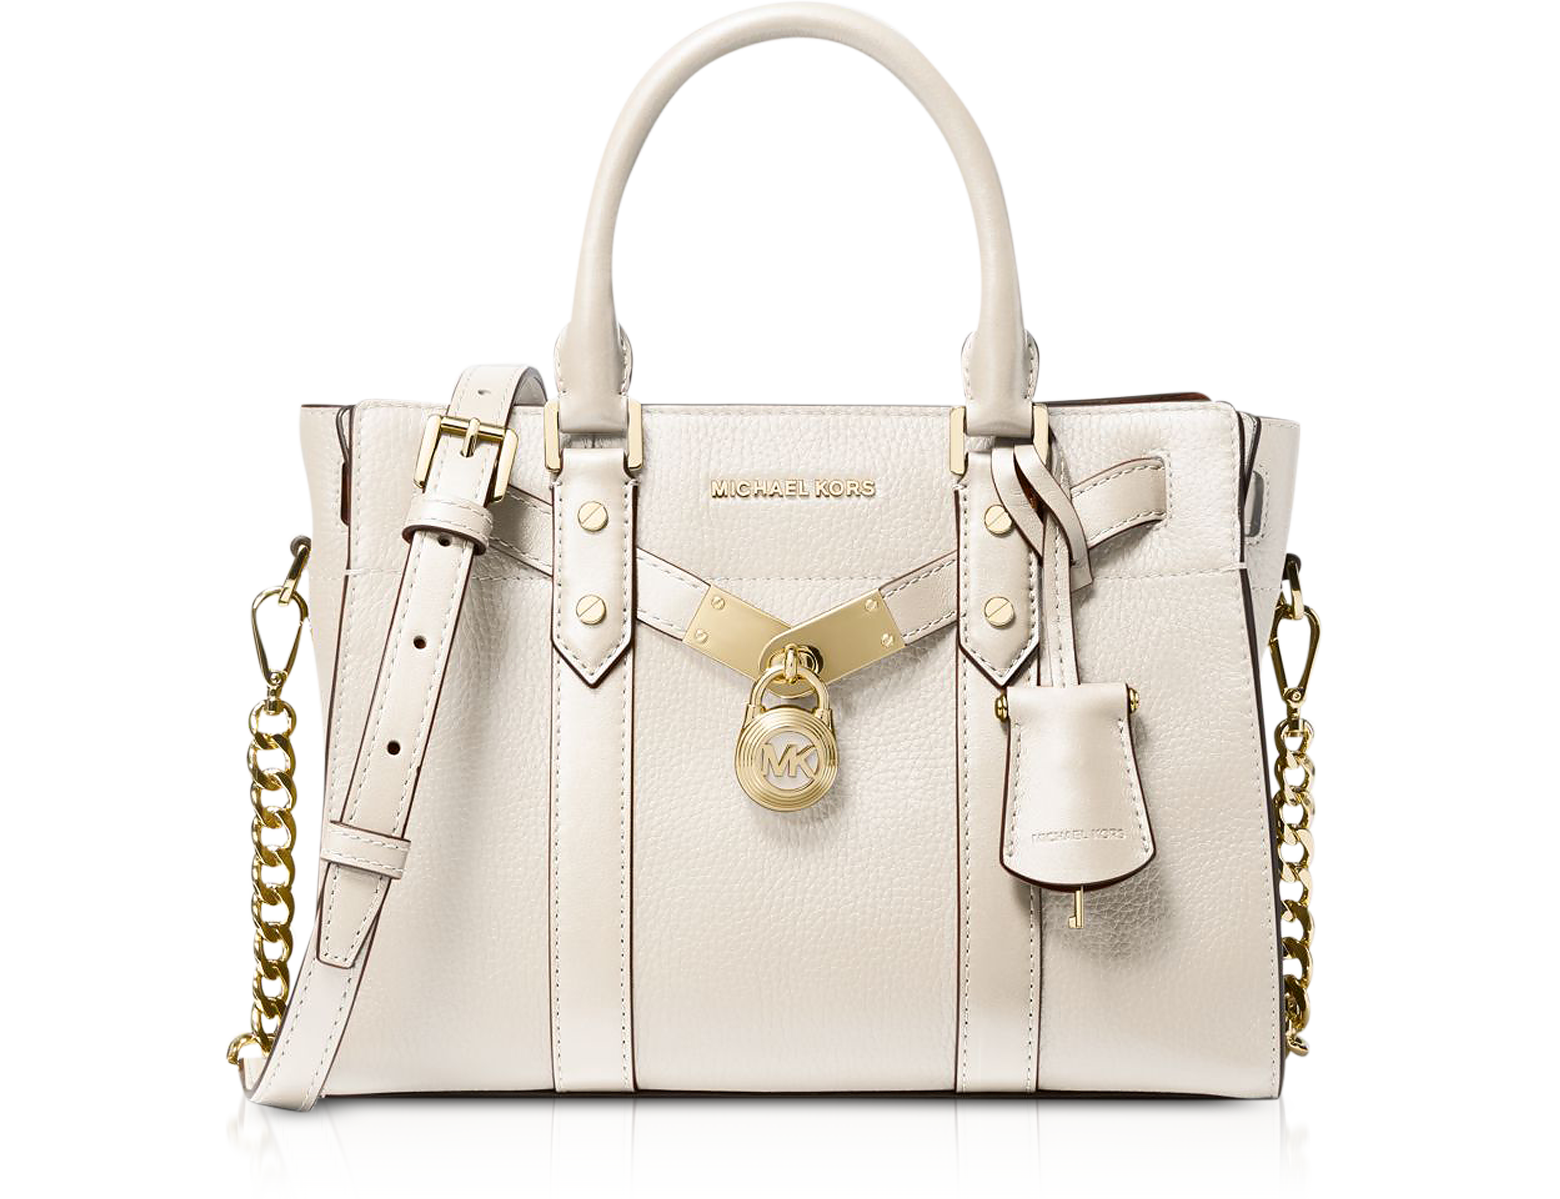 My Precious - Michael Kors Hamilton Bag Review - Prettify Vogue By Anjali